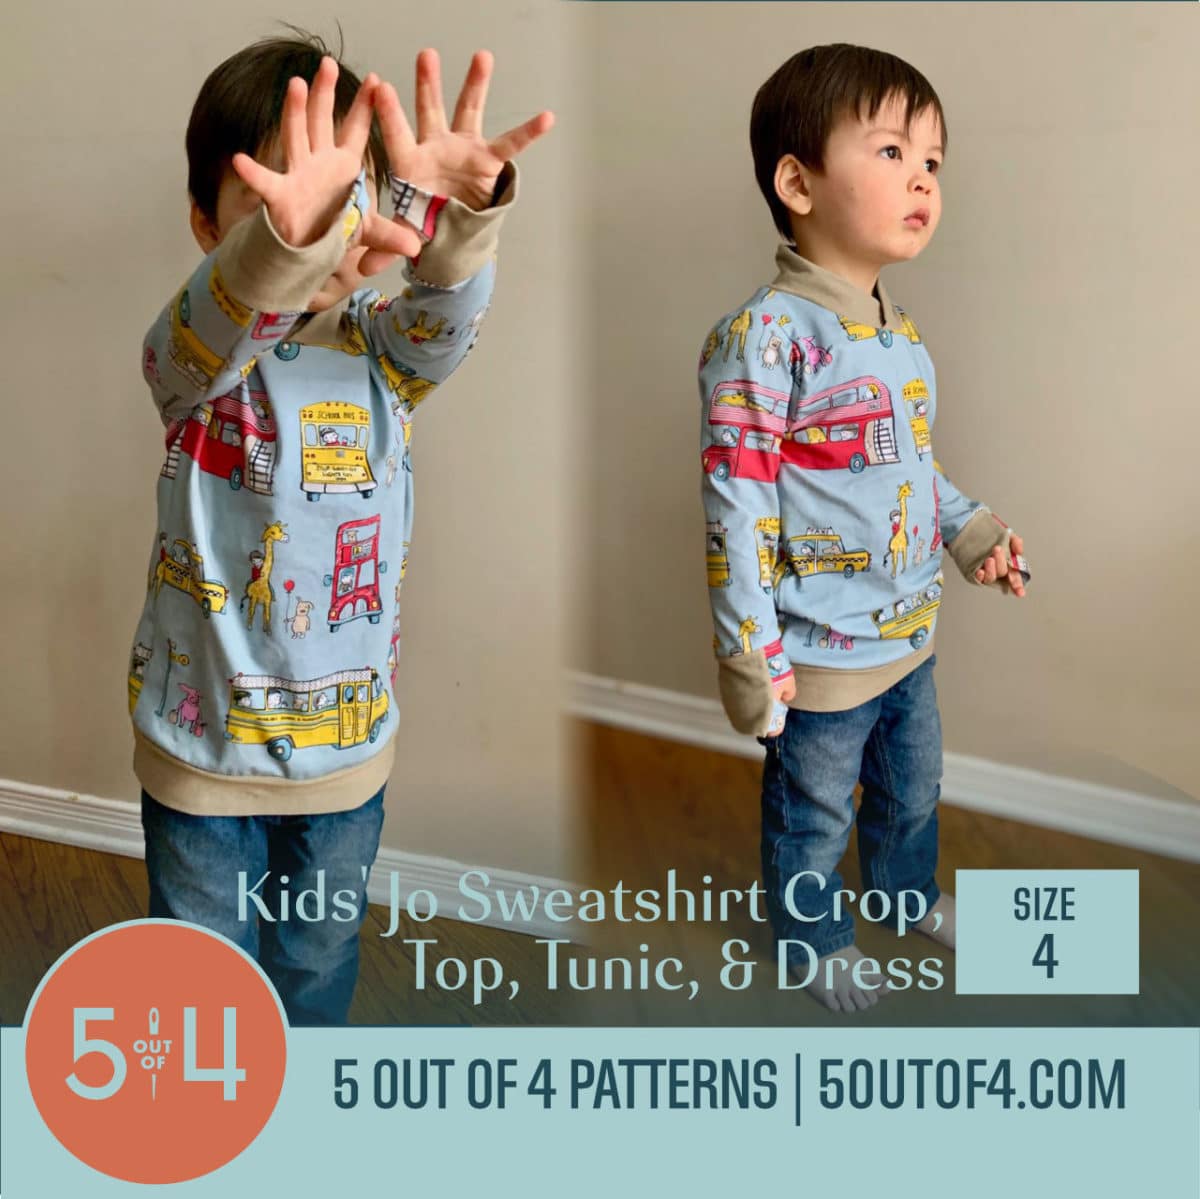 Kids' Jo Sweatshirt Crop, Top, Tunic, and Dress - 5 out of 4 Patterns